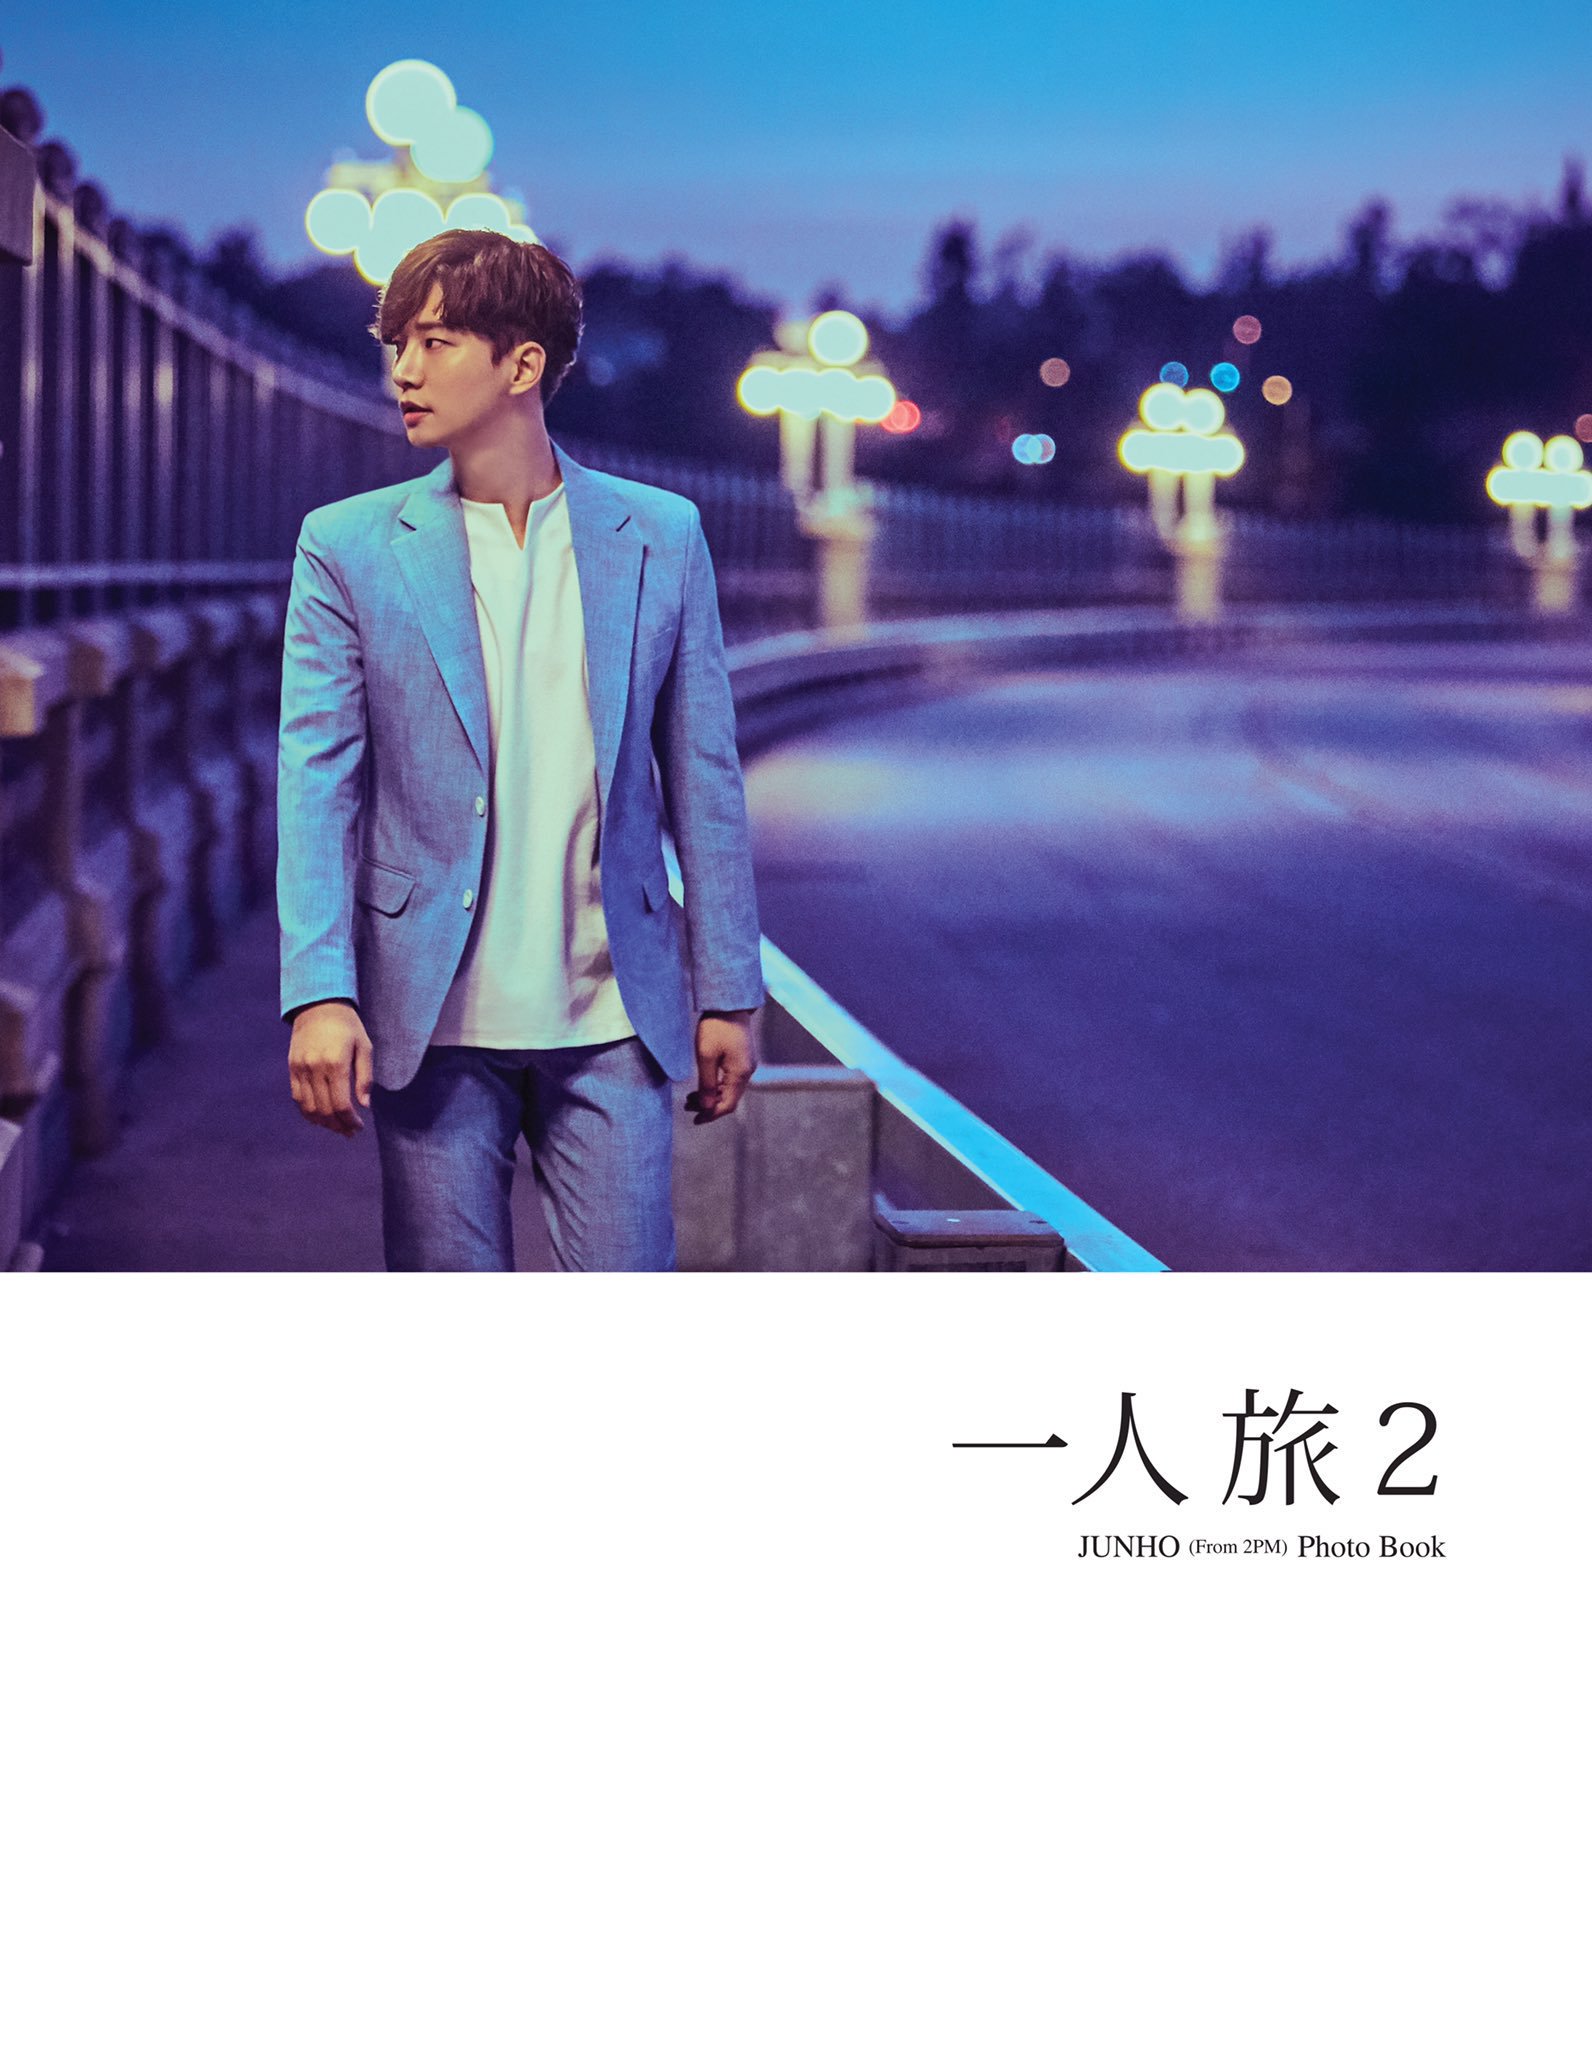 2PM JUNHO ジュノ 一人旅 Paris - recruitment.tomsracing.co.jp